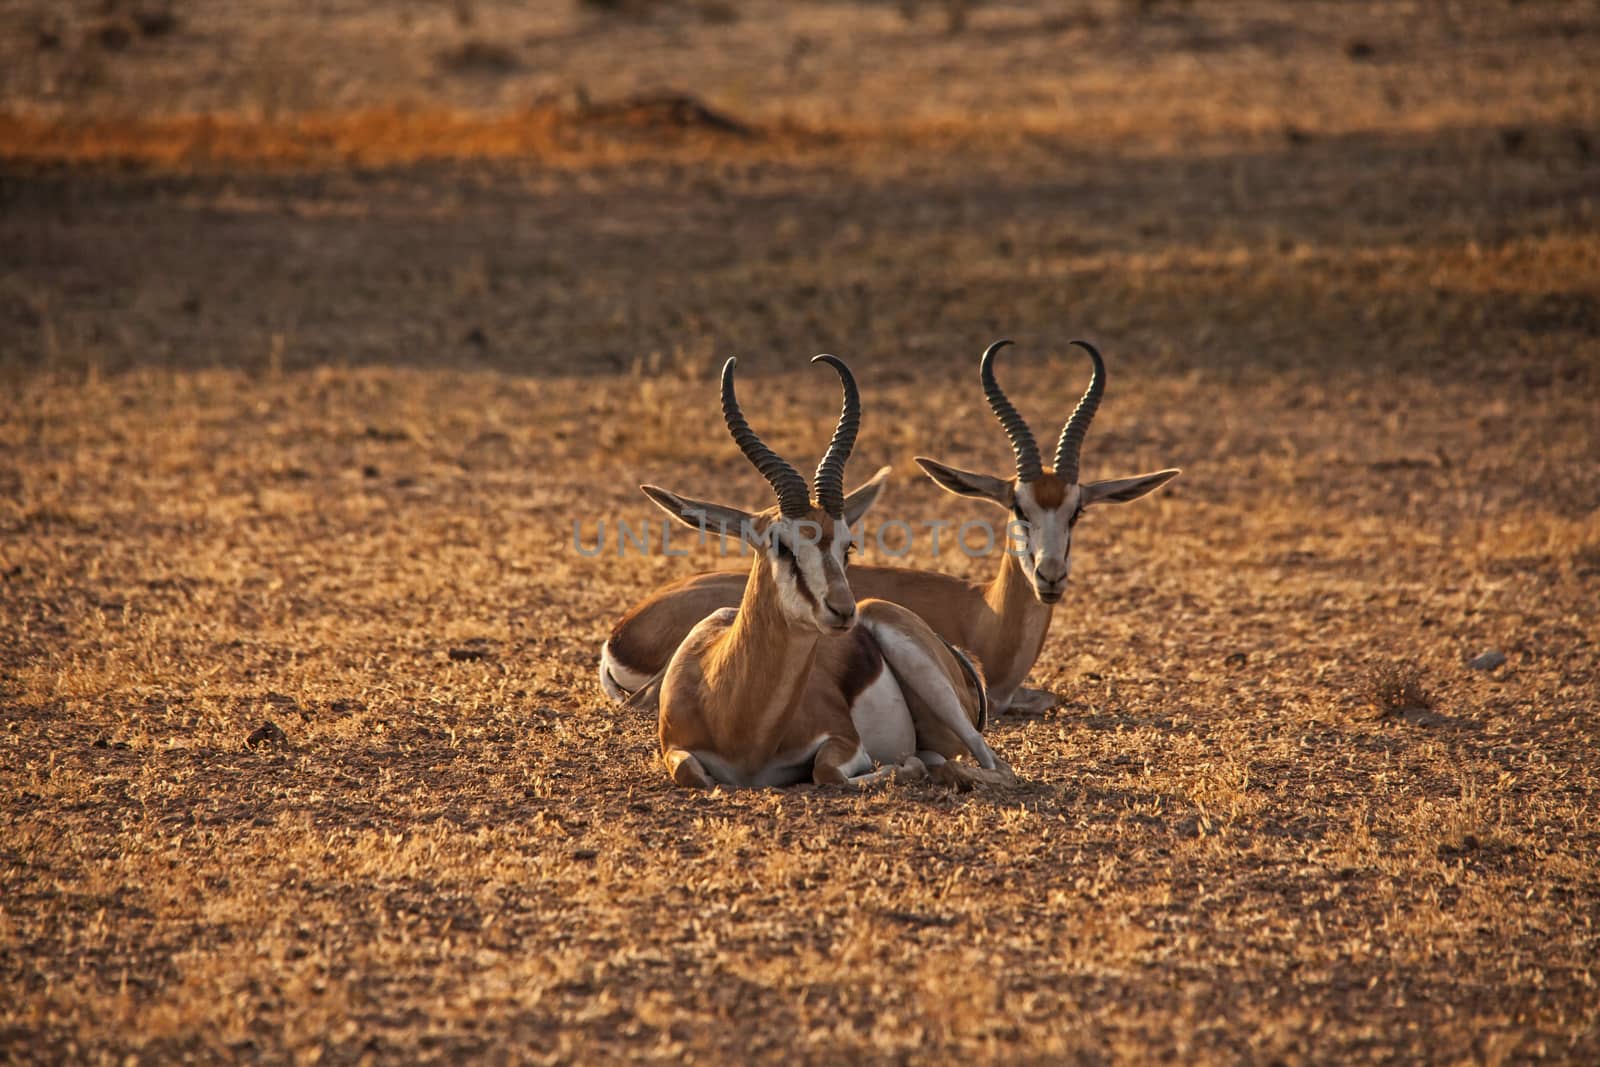 Resting Springbok in a dry desert riverbed. by kobus_peche